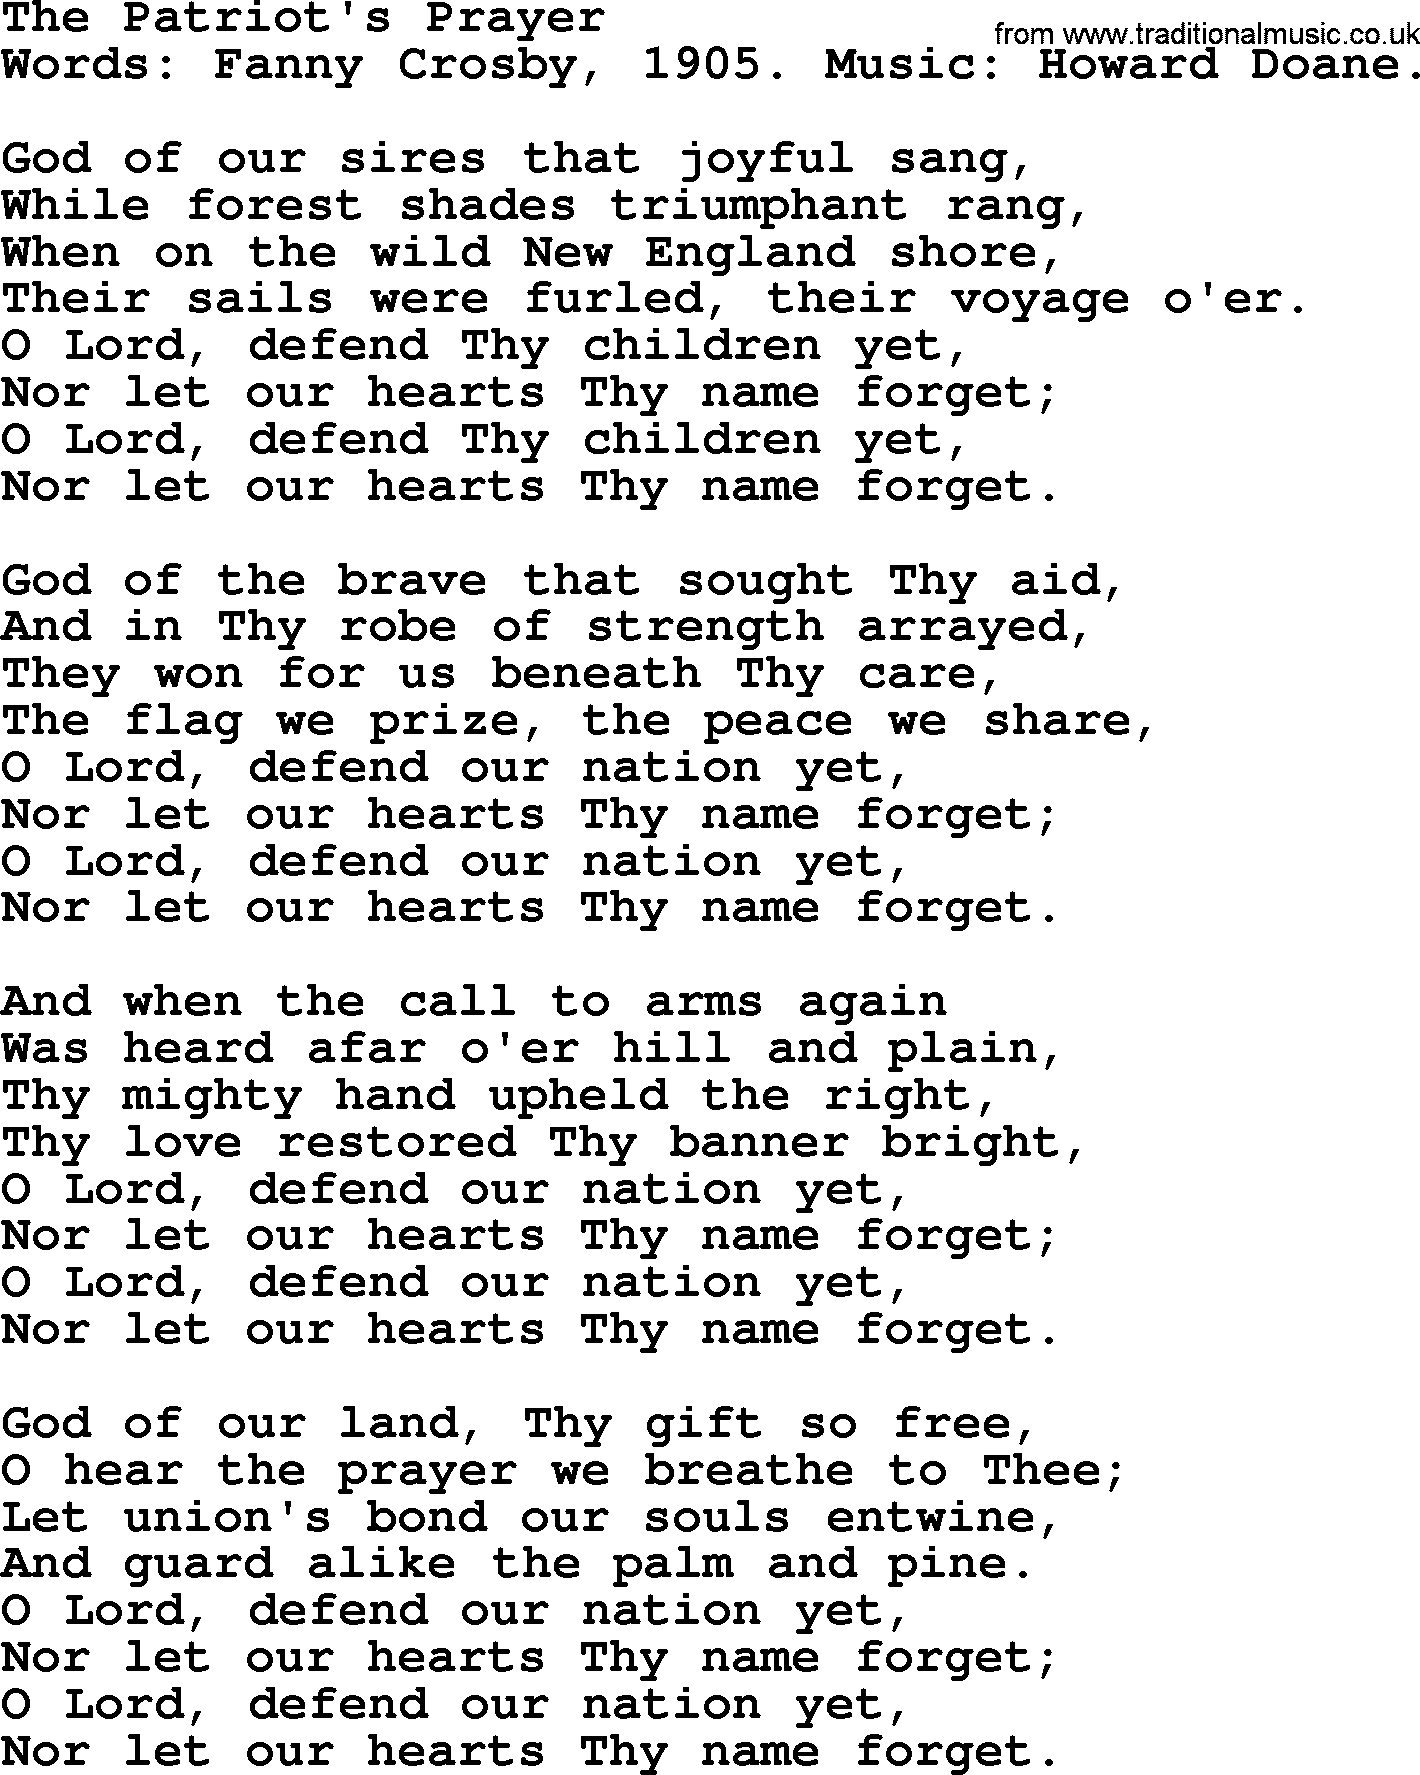 Fanny Crosby song: The Patriot's Prayer, lyrics